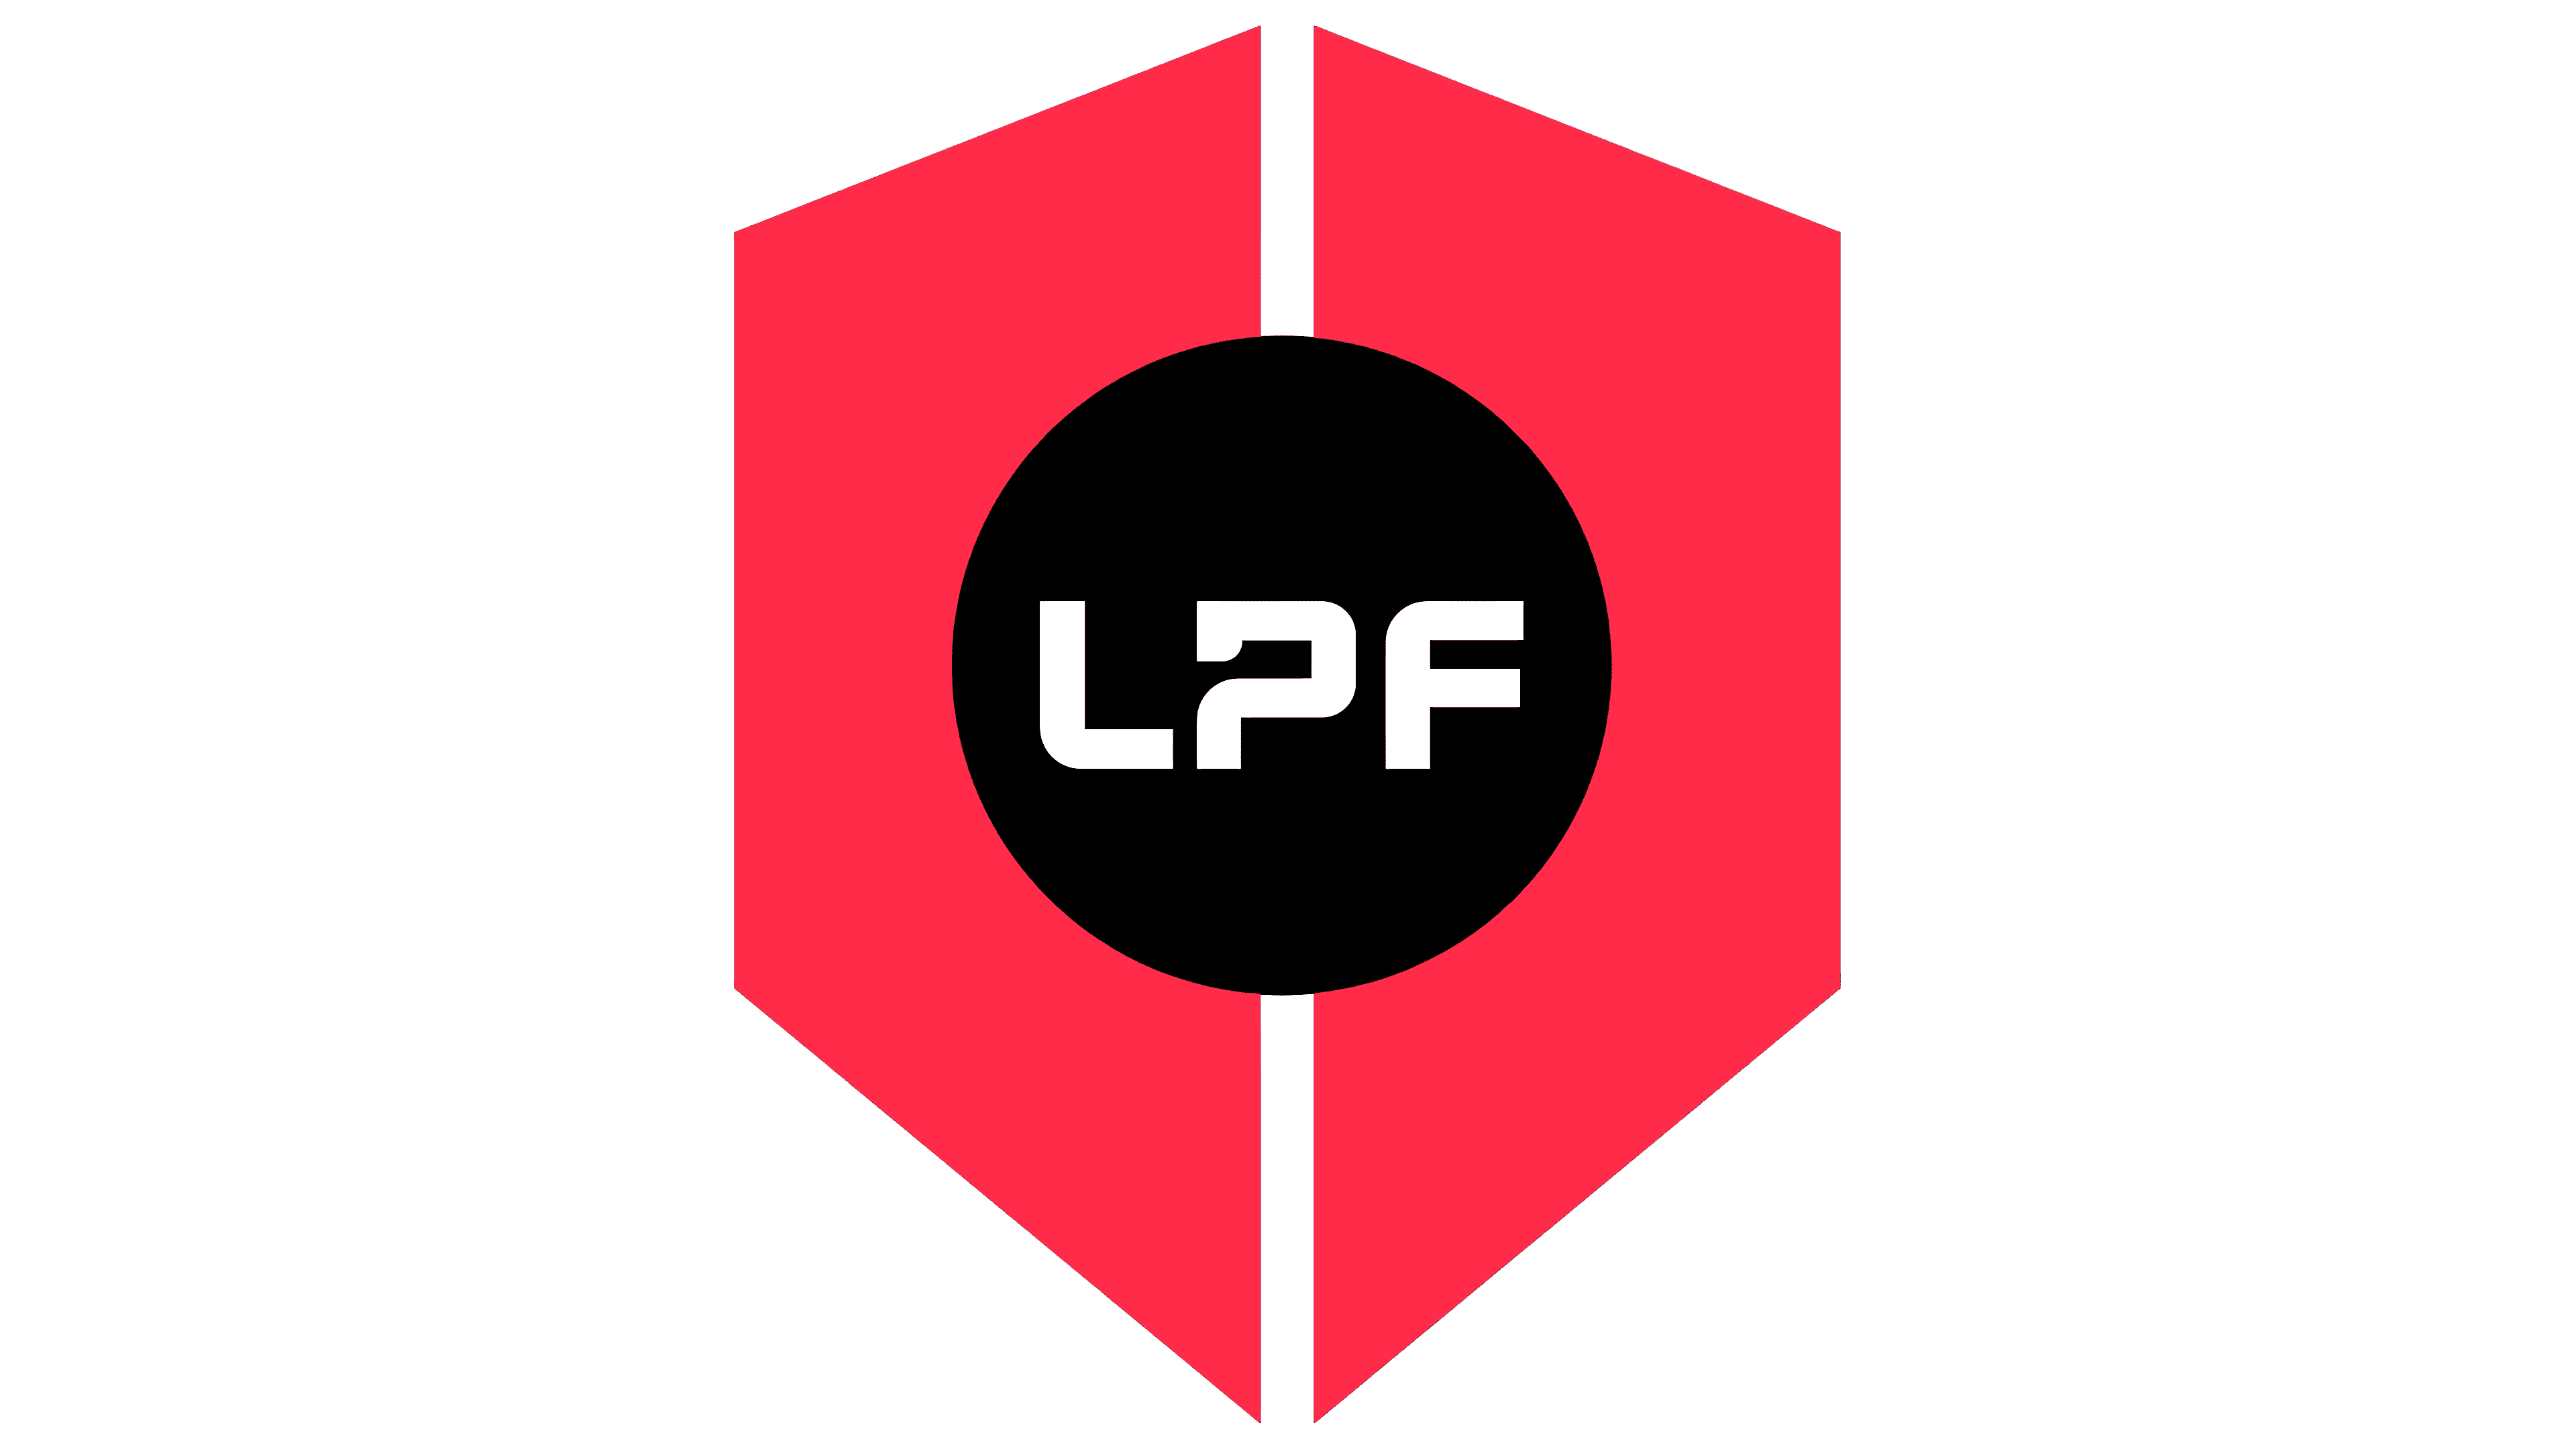 Liga Paulista de Futsal - Wikiwand